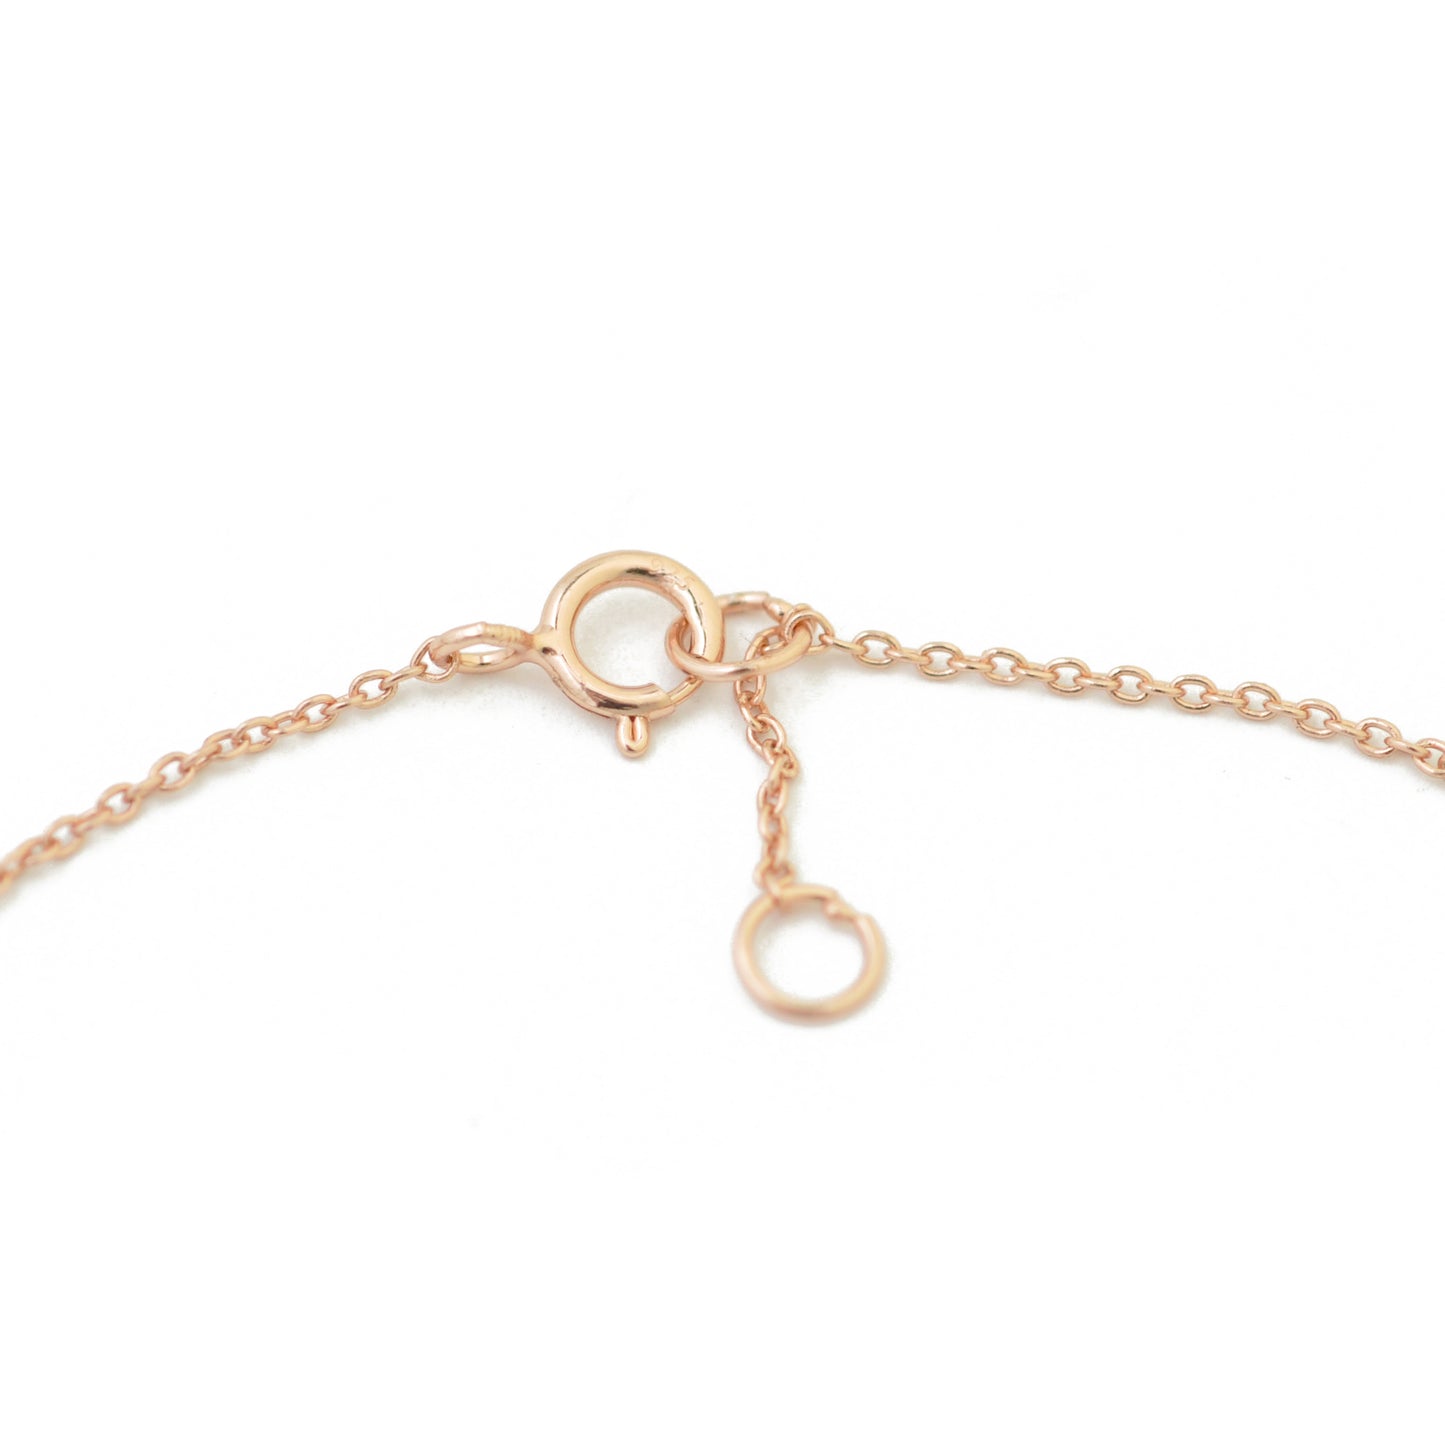 Delicate bracelet / 925 silver 18k rose gold plated / 16-17 cm